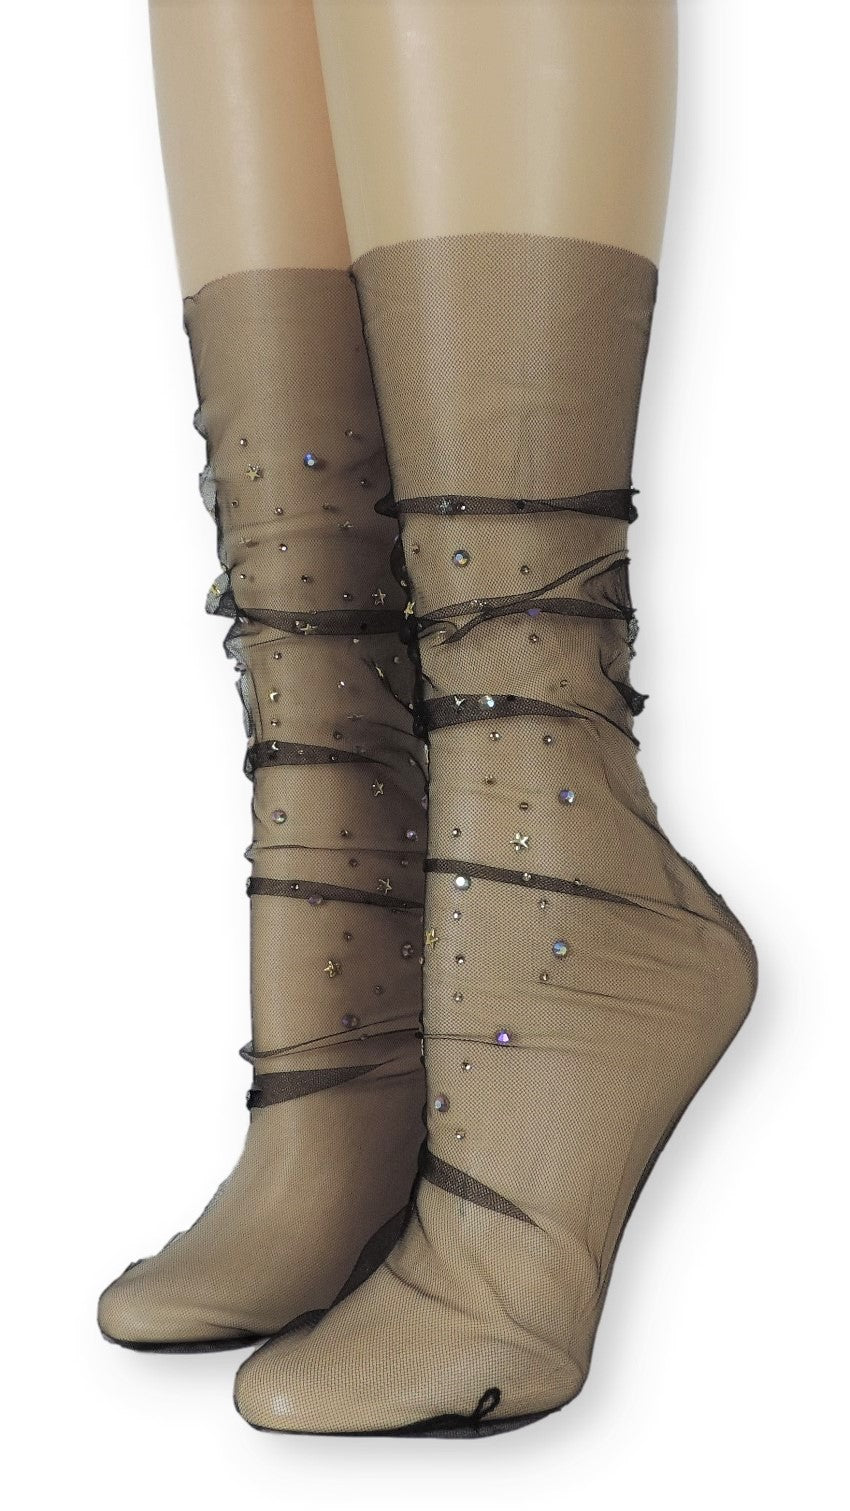 Dashing Tulle Socks with crystals - Global Trendz Fashion®